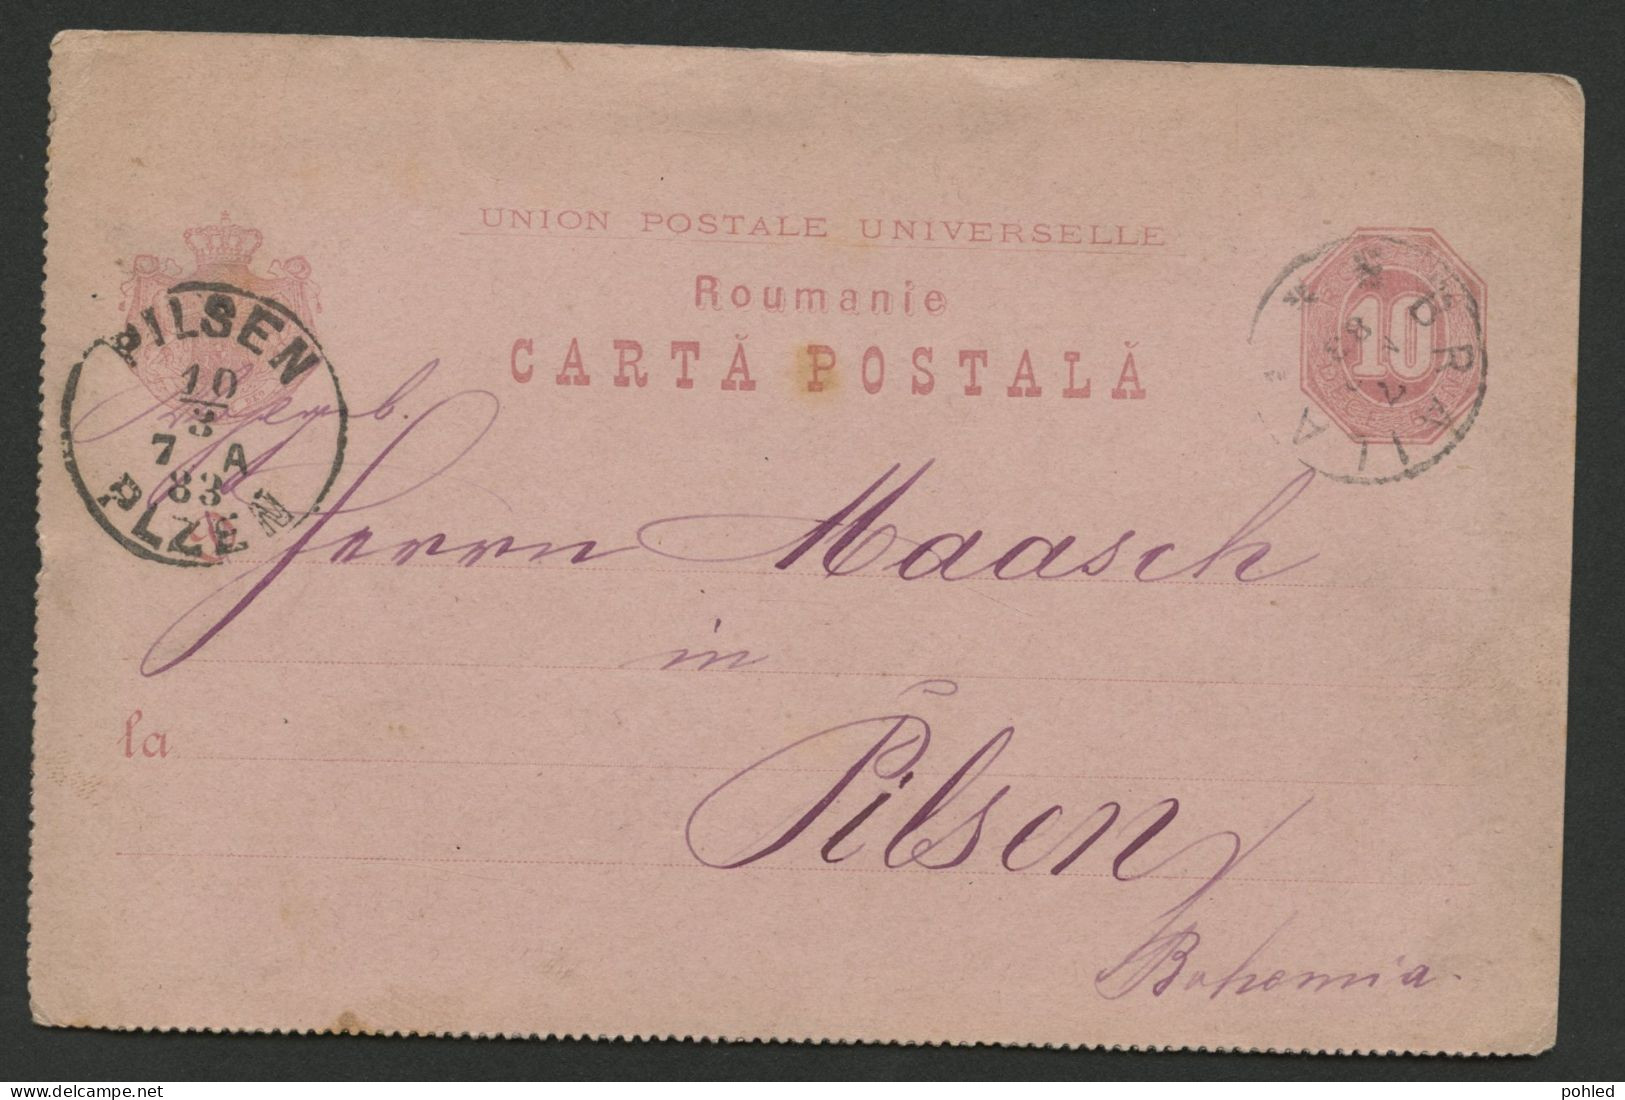 01303*RUMÄNIEN*ROMANIA*CARTA POSTALA*POSTAL STATIONARY*BRAILA TO CZECHIA*1883 - Covers & Documents